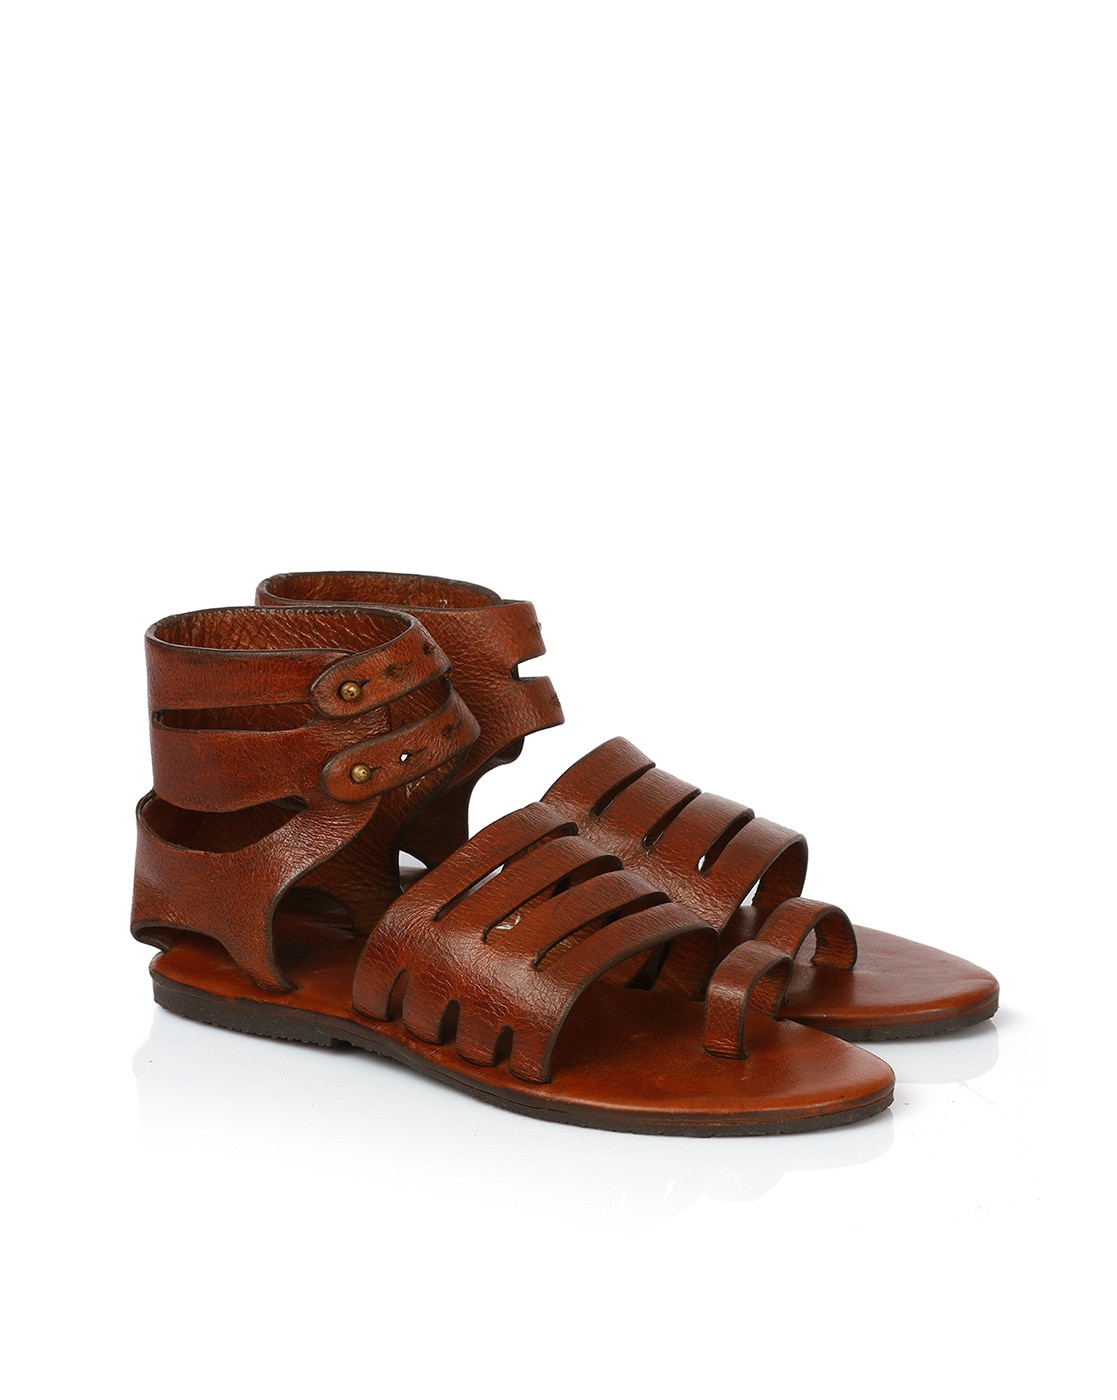 Brown faux leather gladiator sandals, handmade small artisan workshop Gado  Nayru